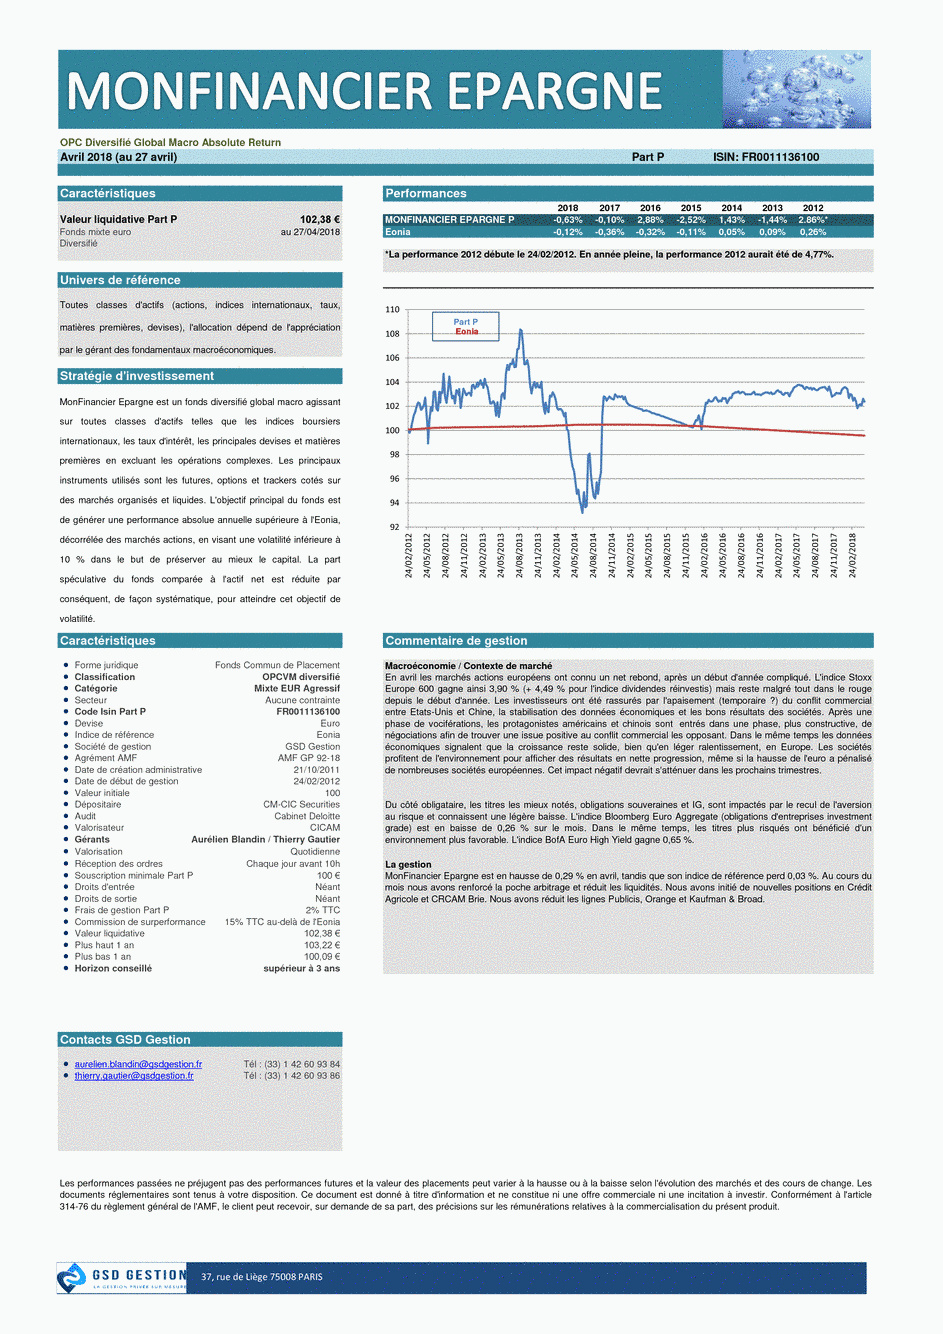 Reporting Monfinancier Epargne P - 04/05/2018 - undefined